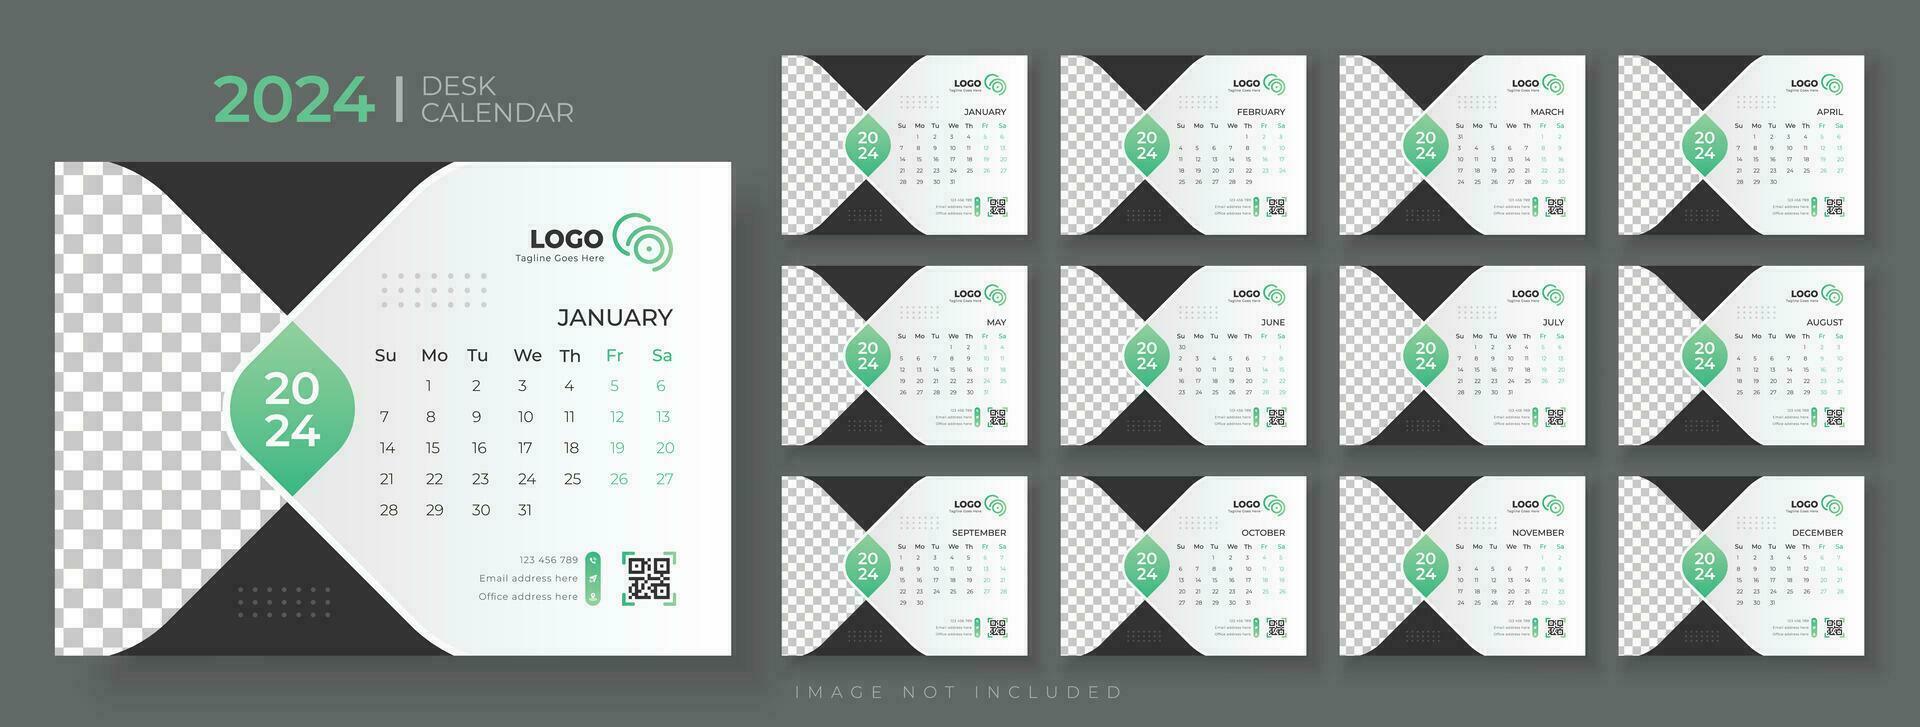 Modern Desk Calendar 2024, Office Calendar 2024,Week Starts on sunday, template for annual calendar 2024. vector